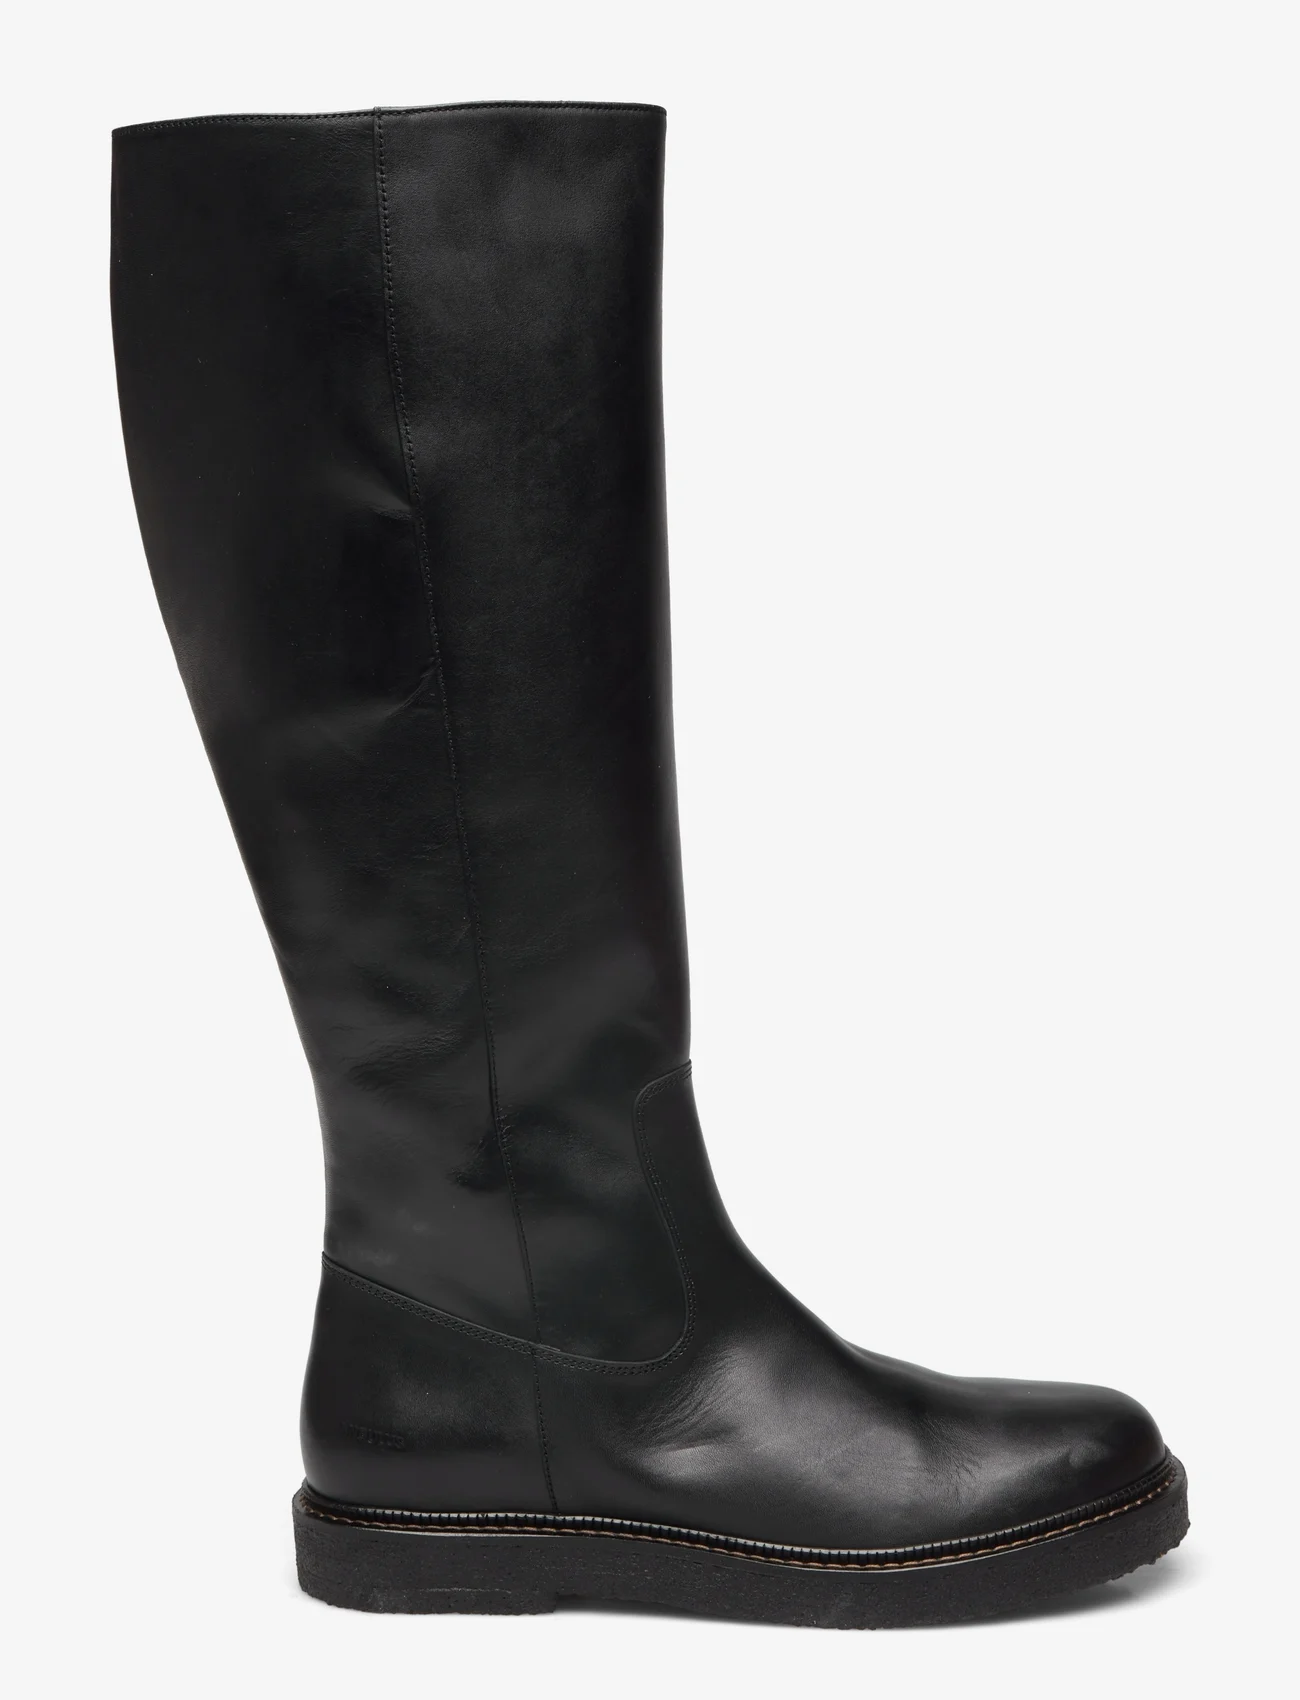 ANGULUS - Boots - flat - lange laarzen - 1604/001 black/black - 1